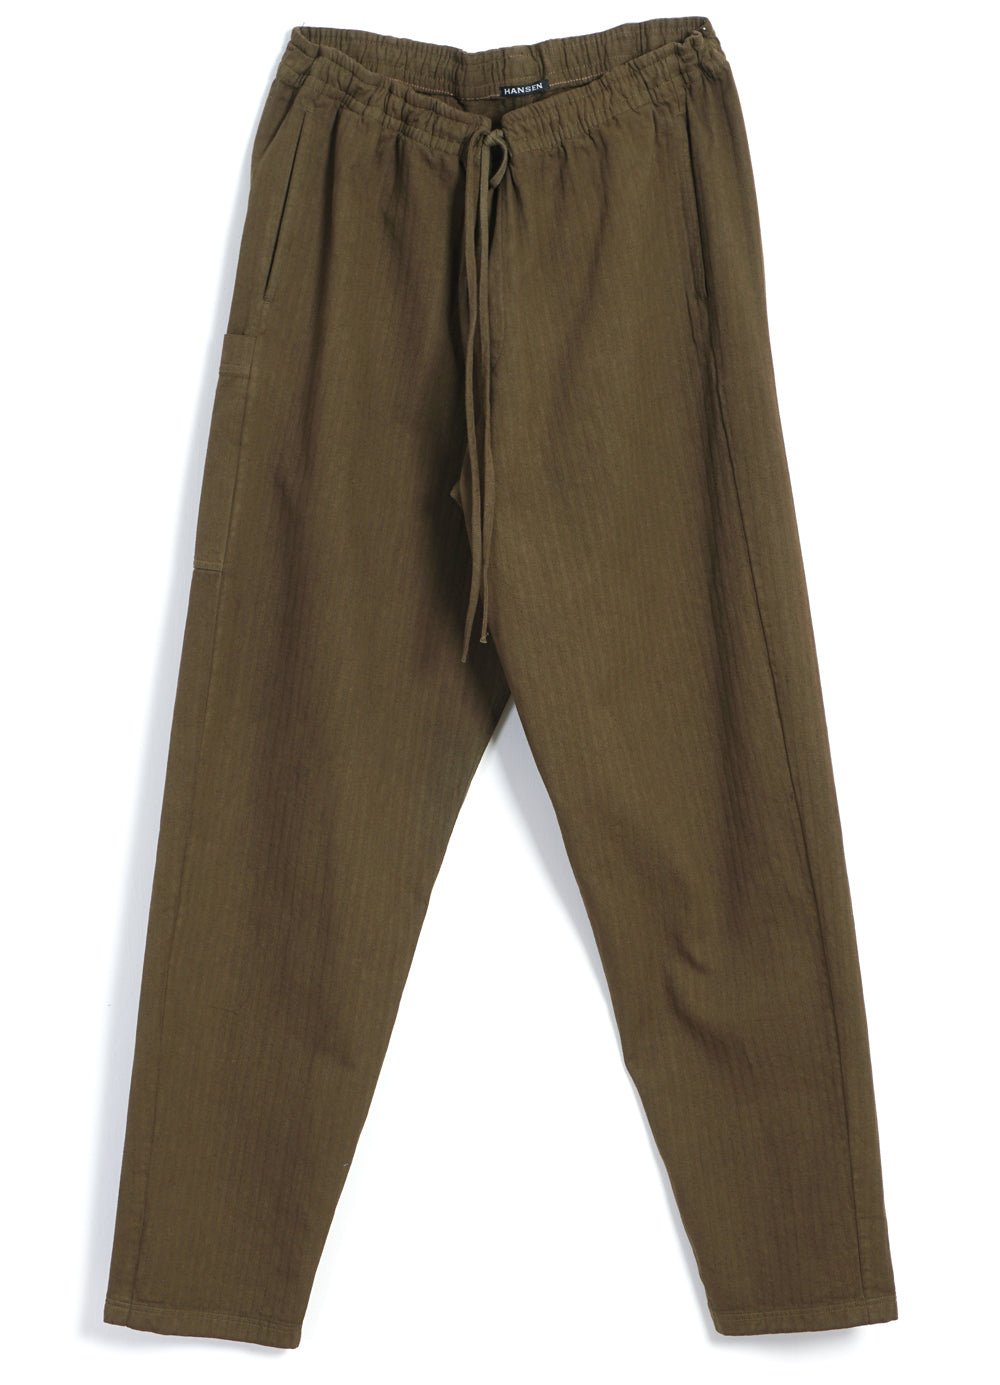 HANSEN GARMENTS - JACK | Casual Drawstring Pants | Plant - HANSEN Garments